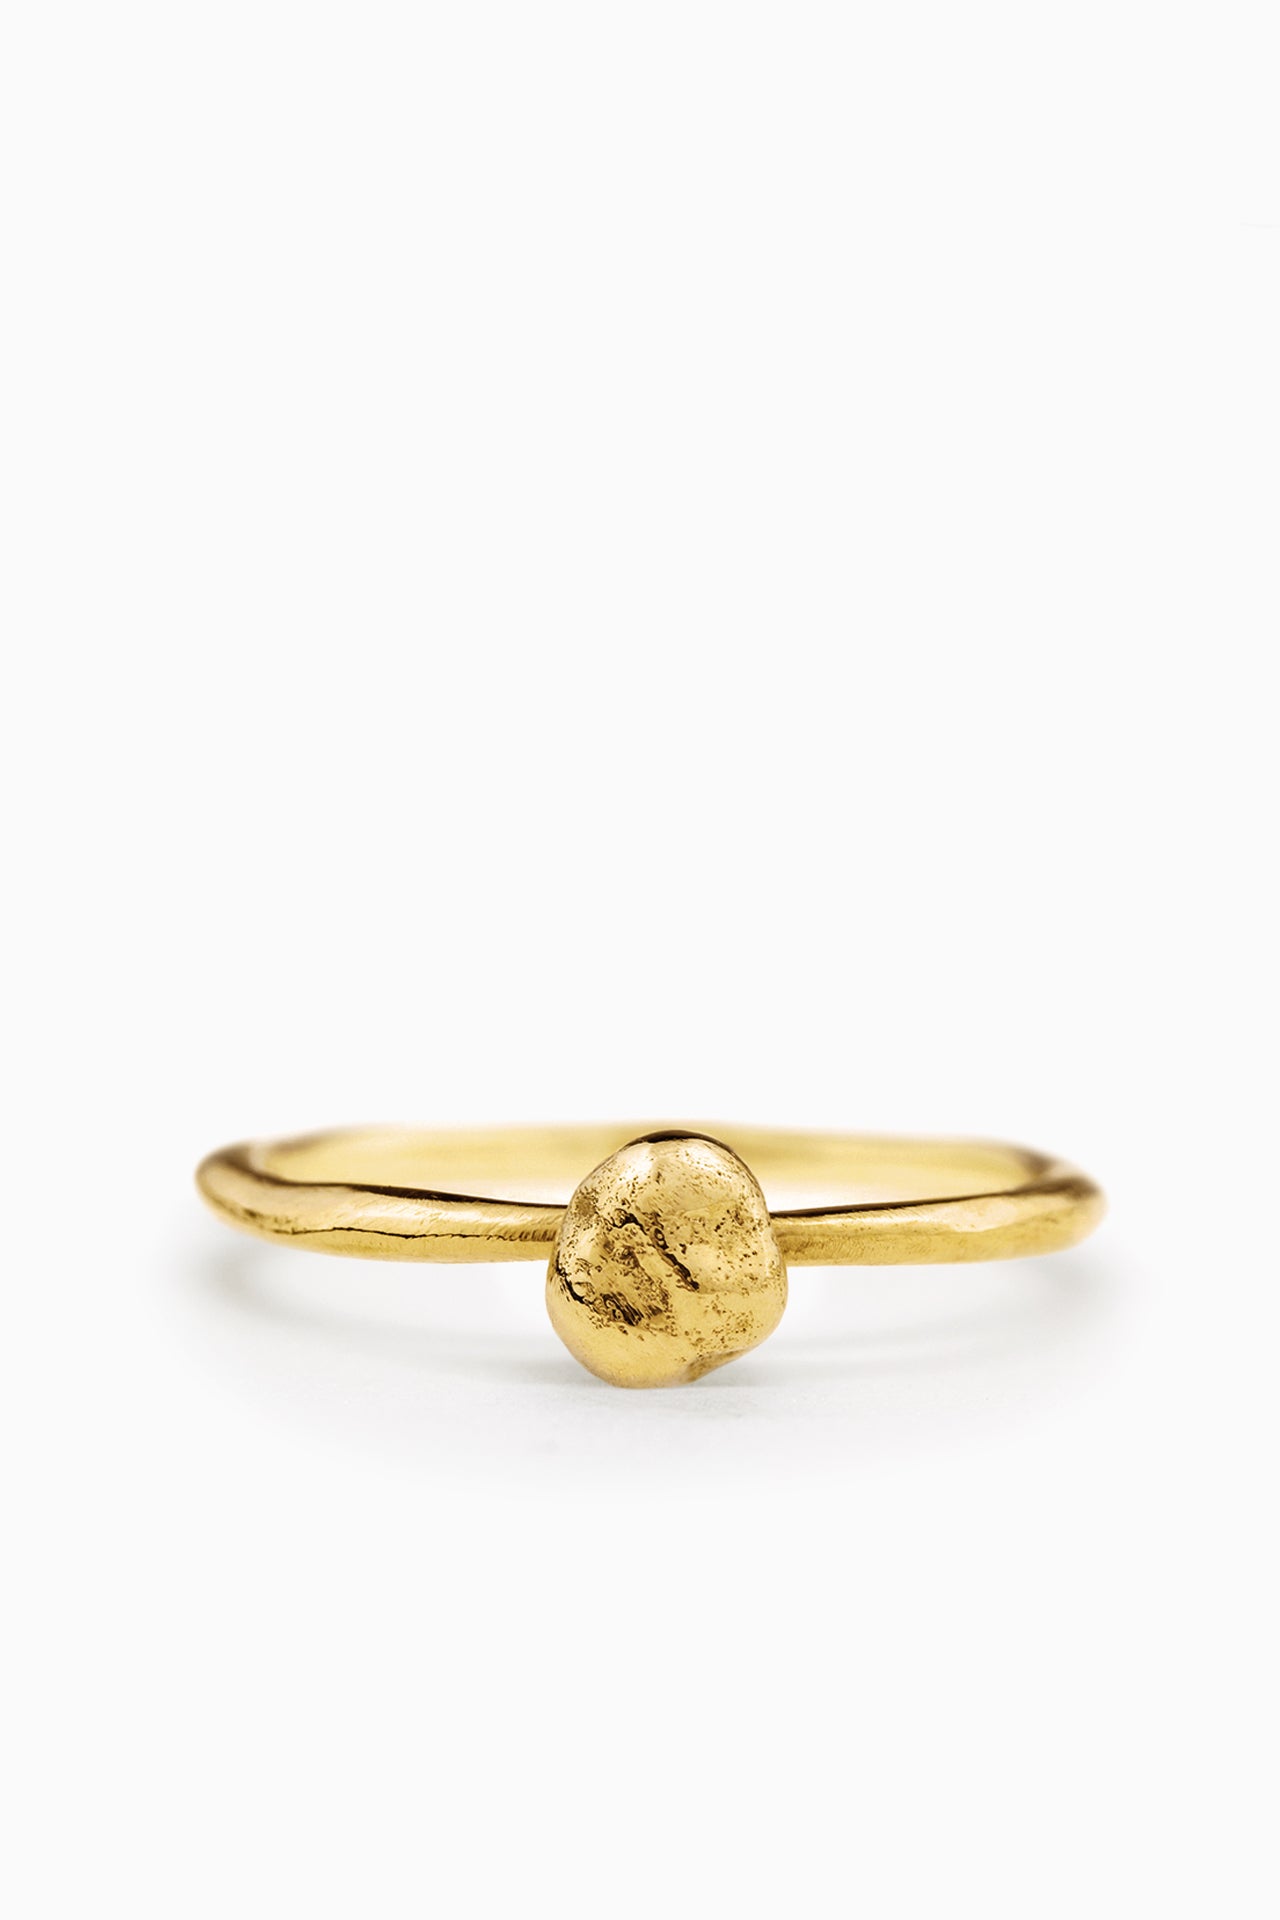 18k fairmined gouden ring met goudkorrel